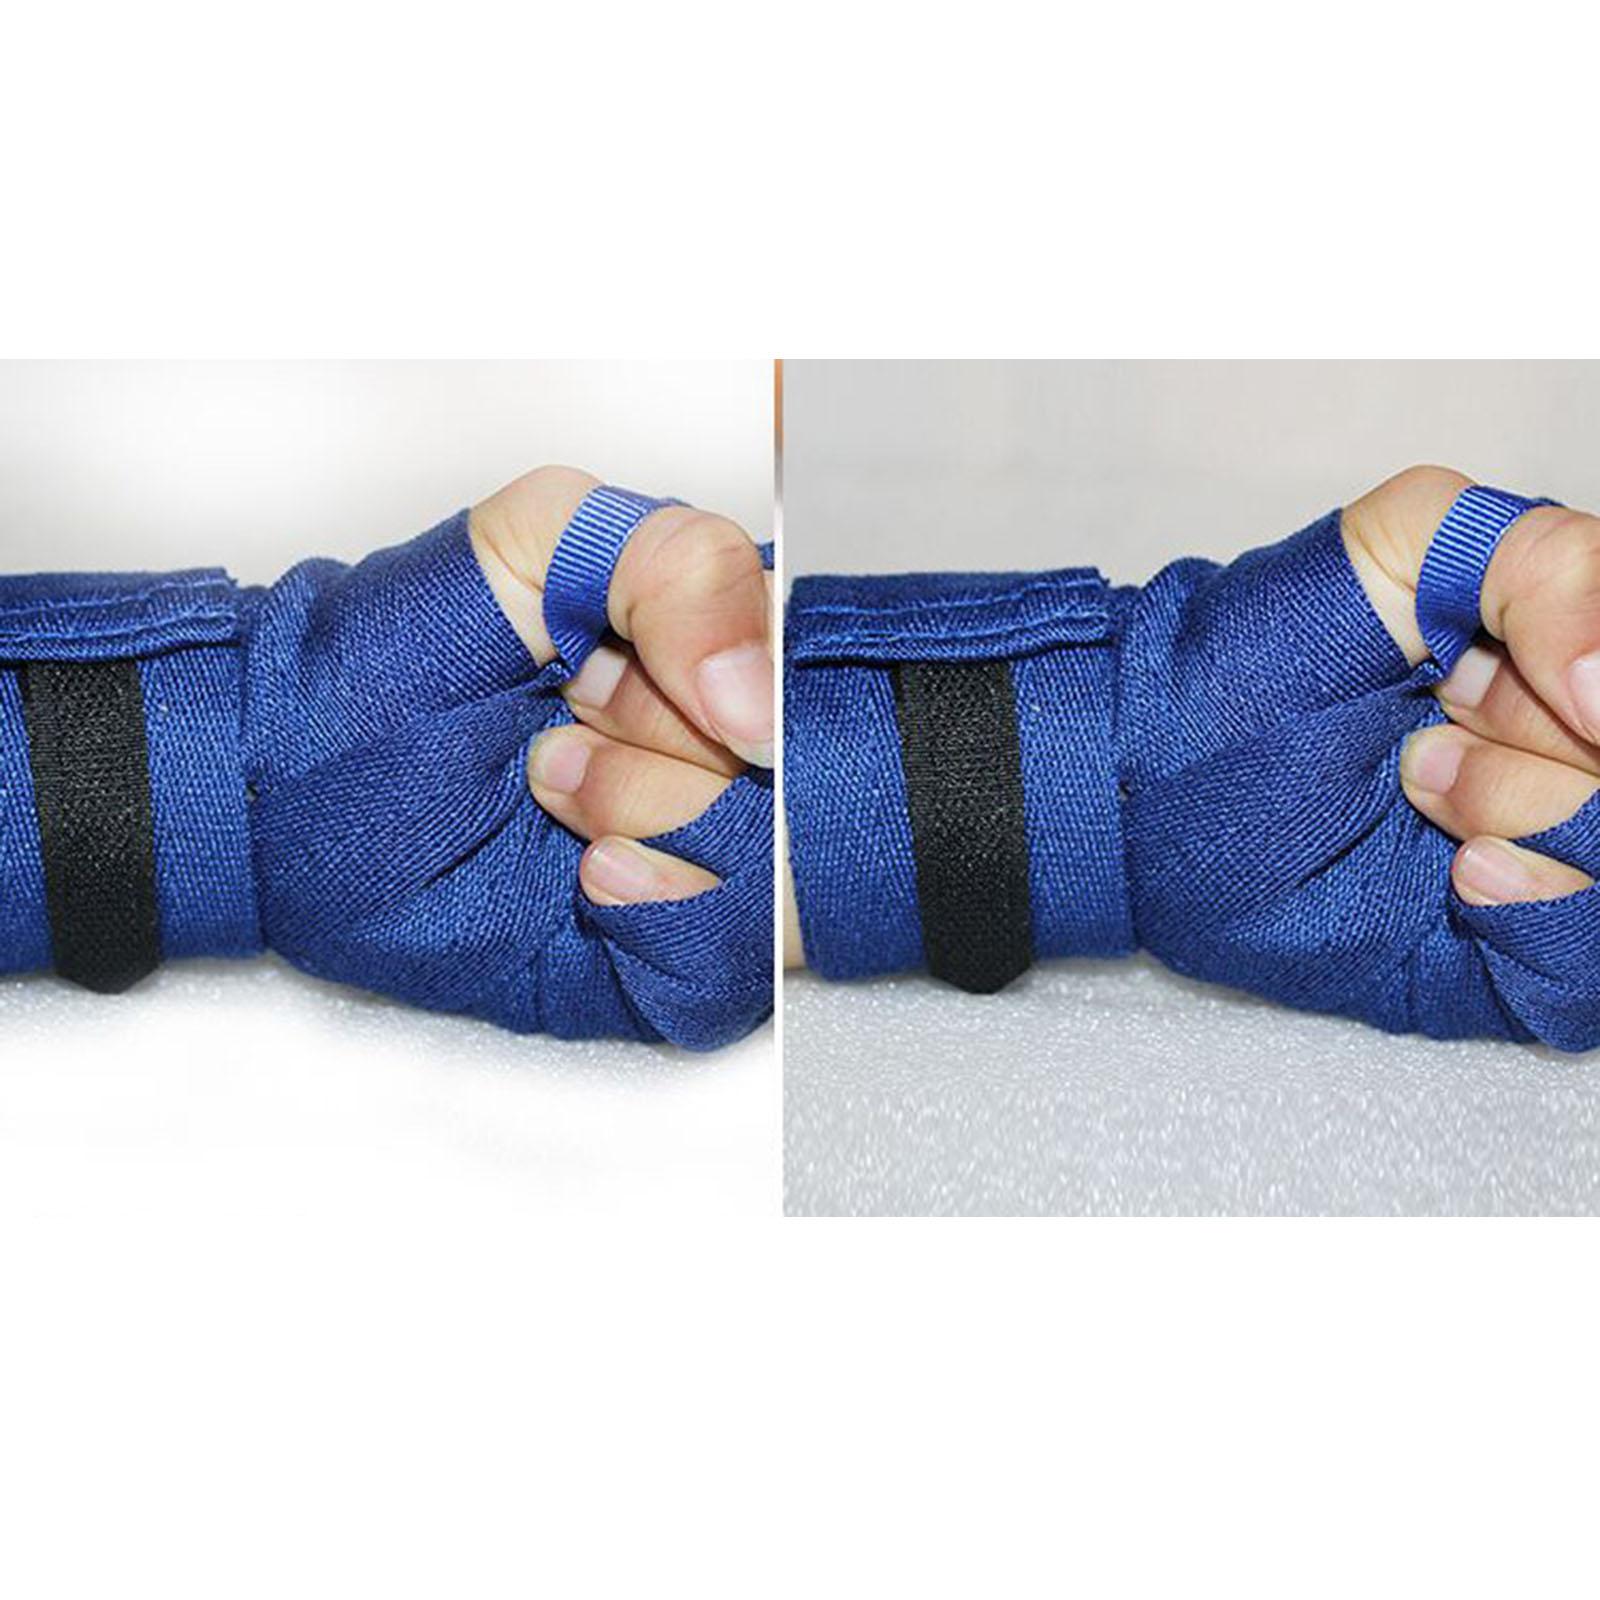 Boxing Wraps Gloves Protective Gear Kickboxing Bandages Unisex blue